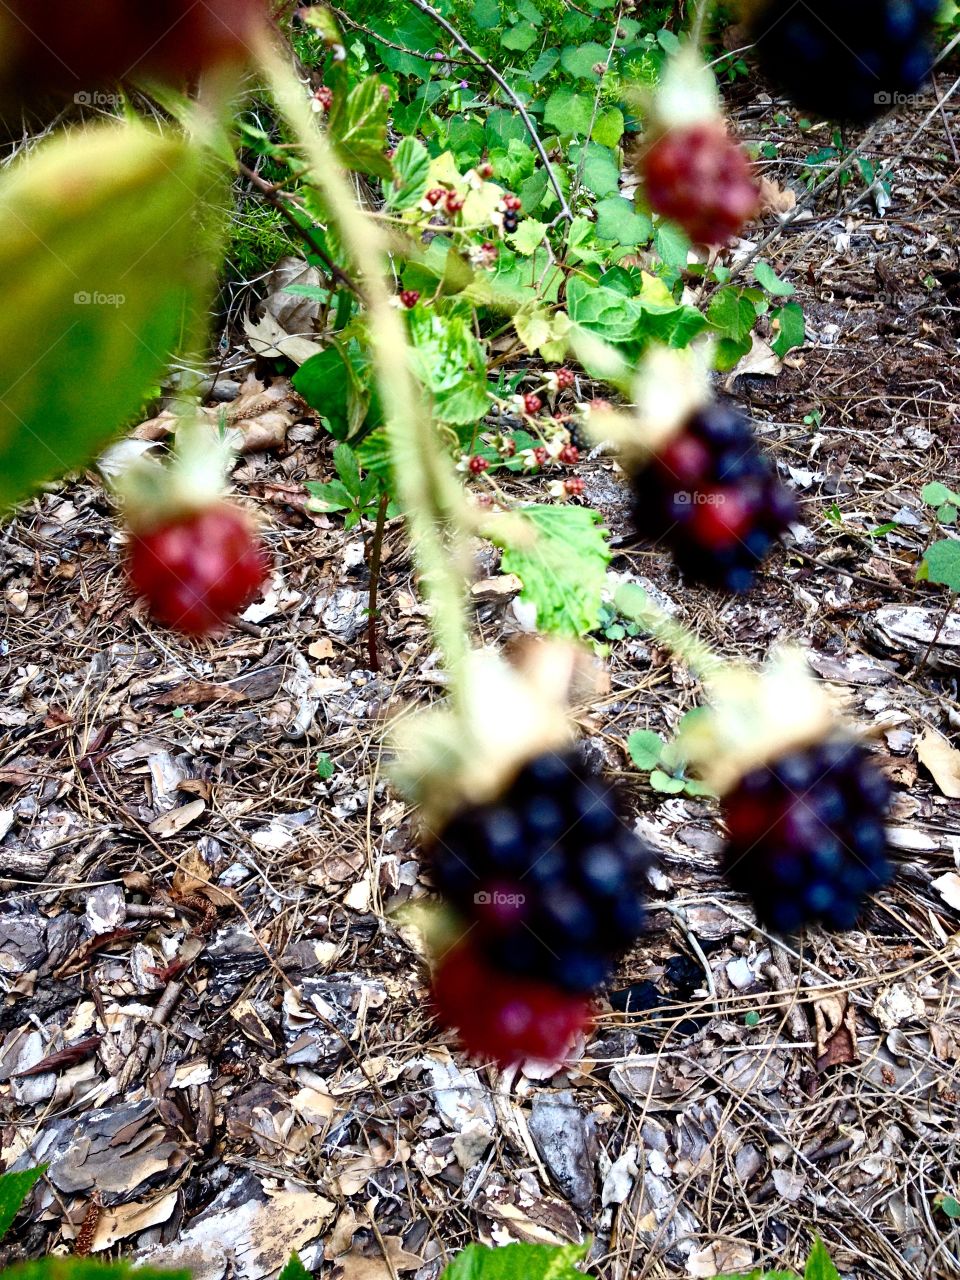 Blackberries out of focus 2